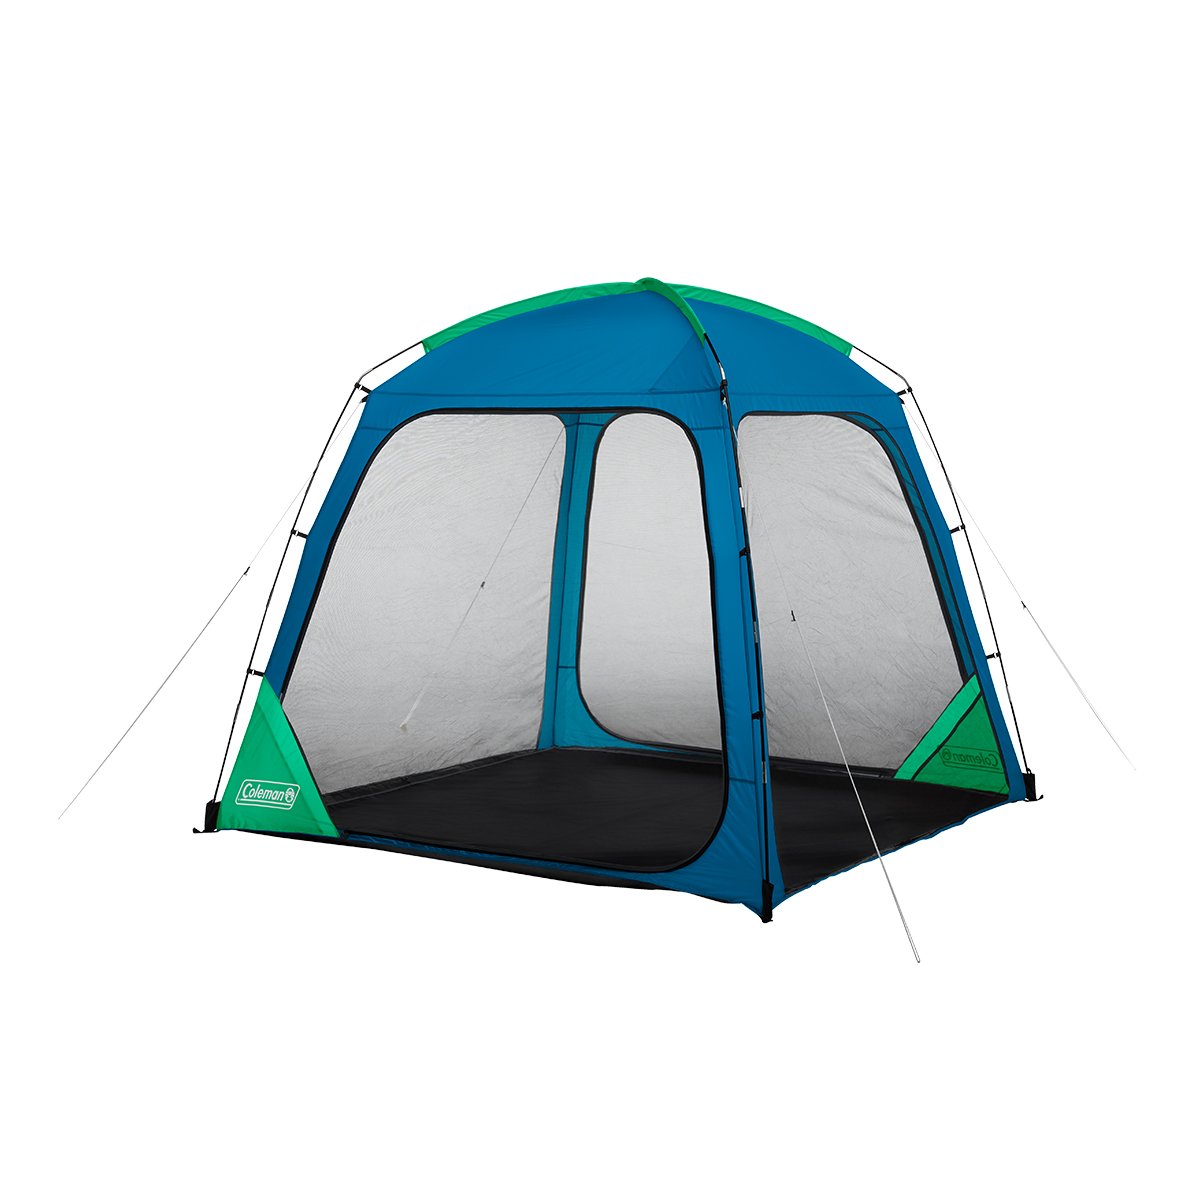 Blue *NEW* 10' x 8' 5' Center Easy Setup Lake & Trail Dome Tent Sleeps 4 